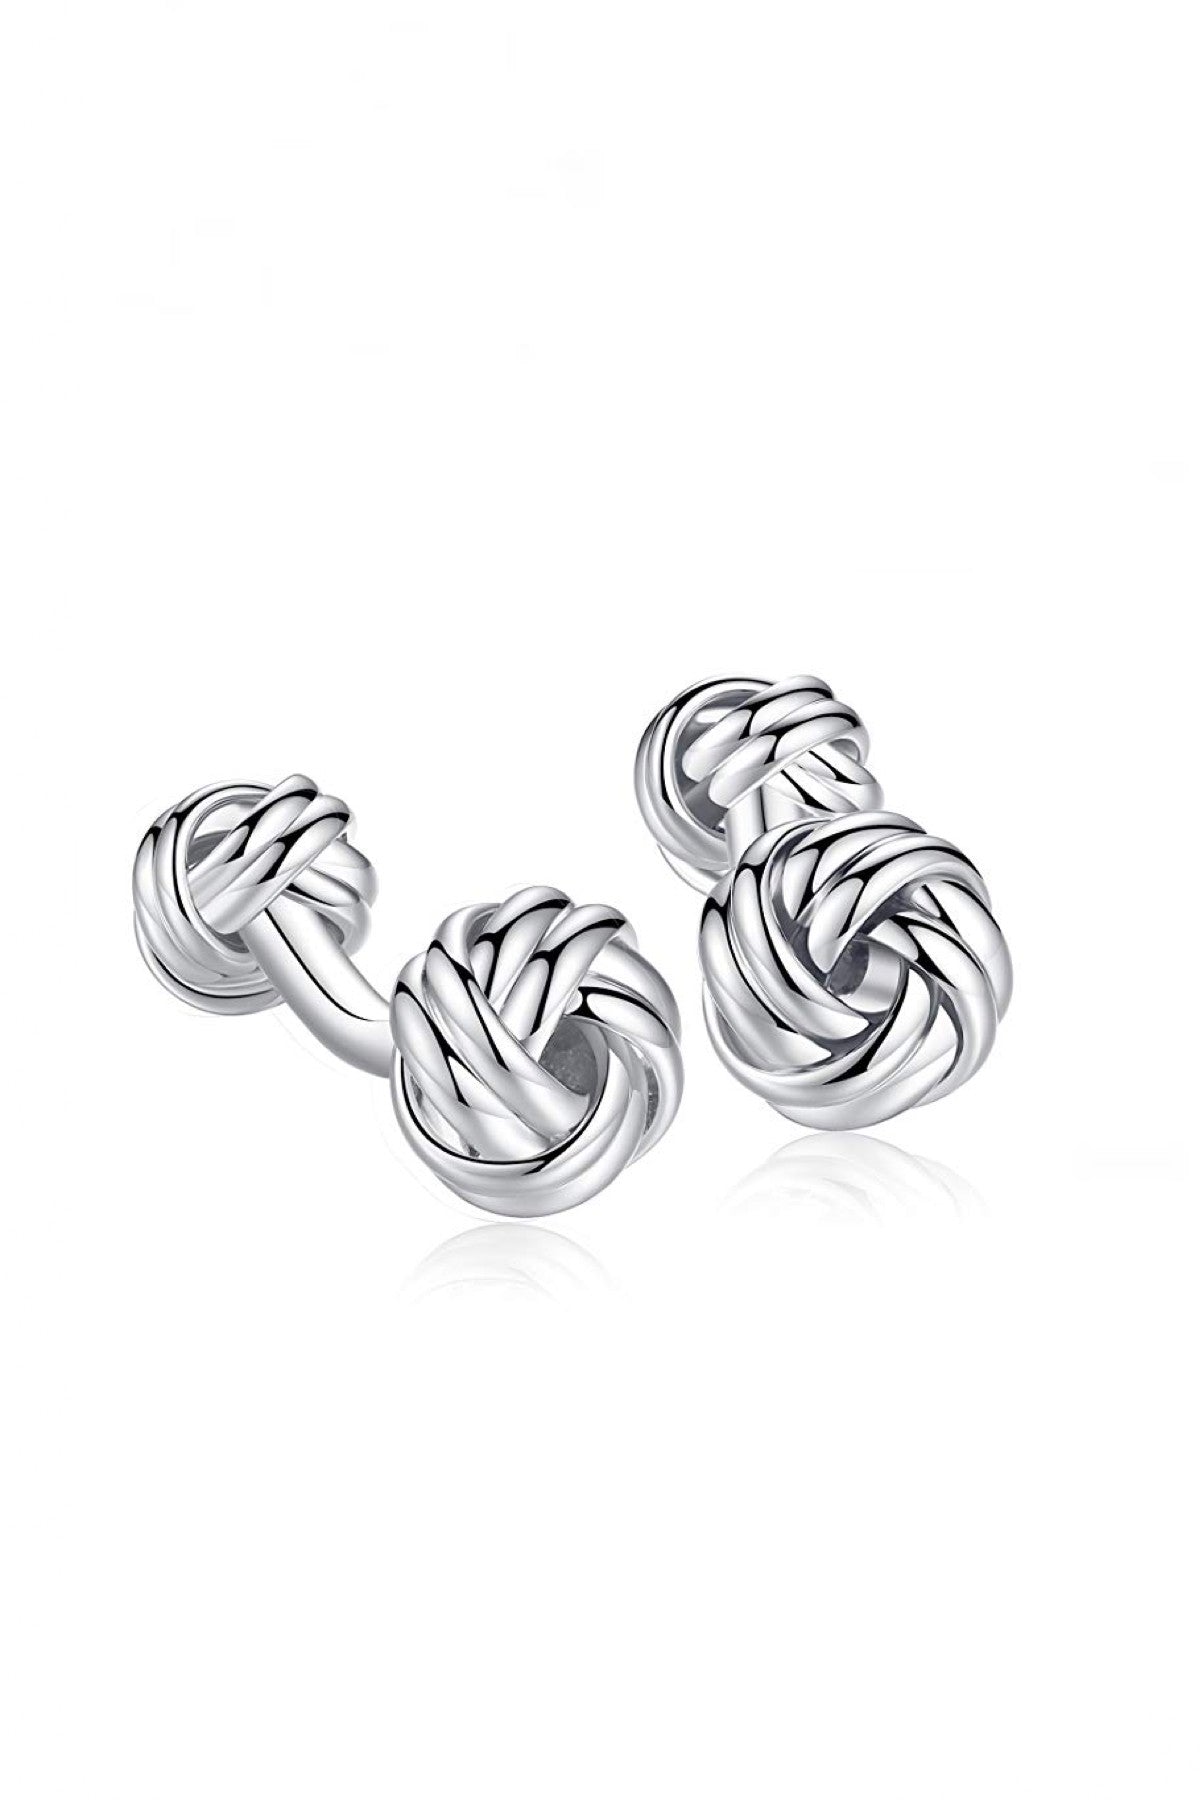 Silver Double Knot Cufflinks